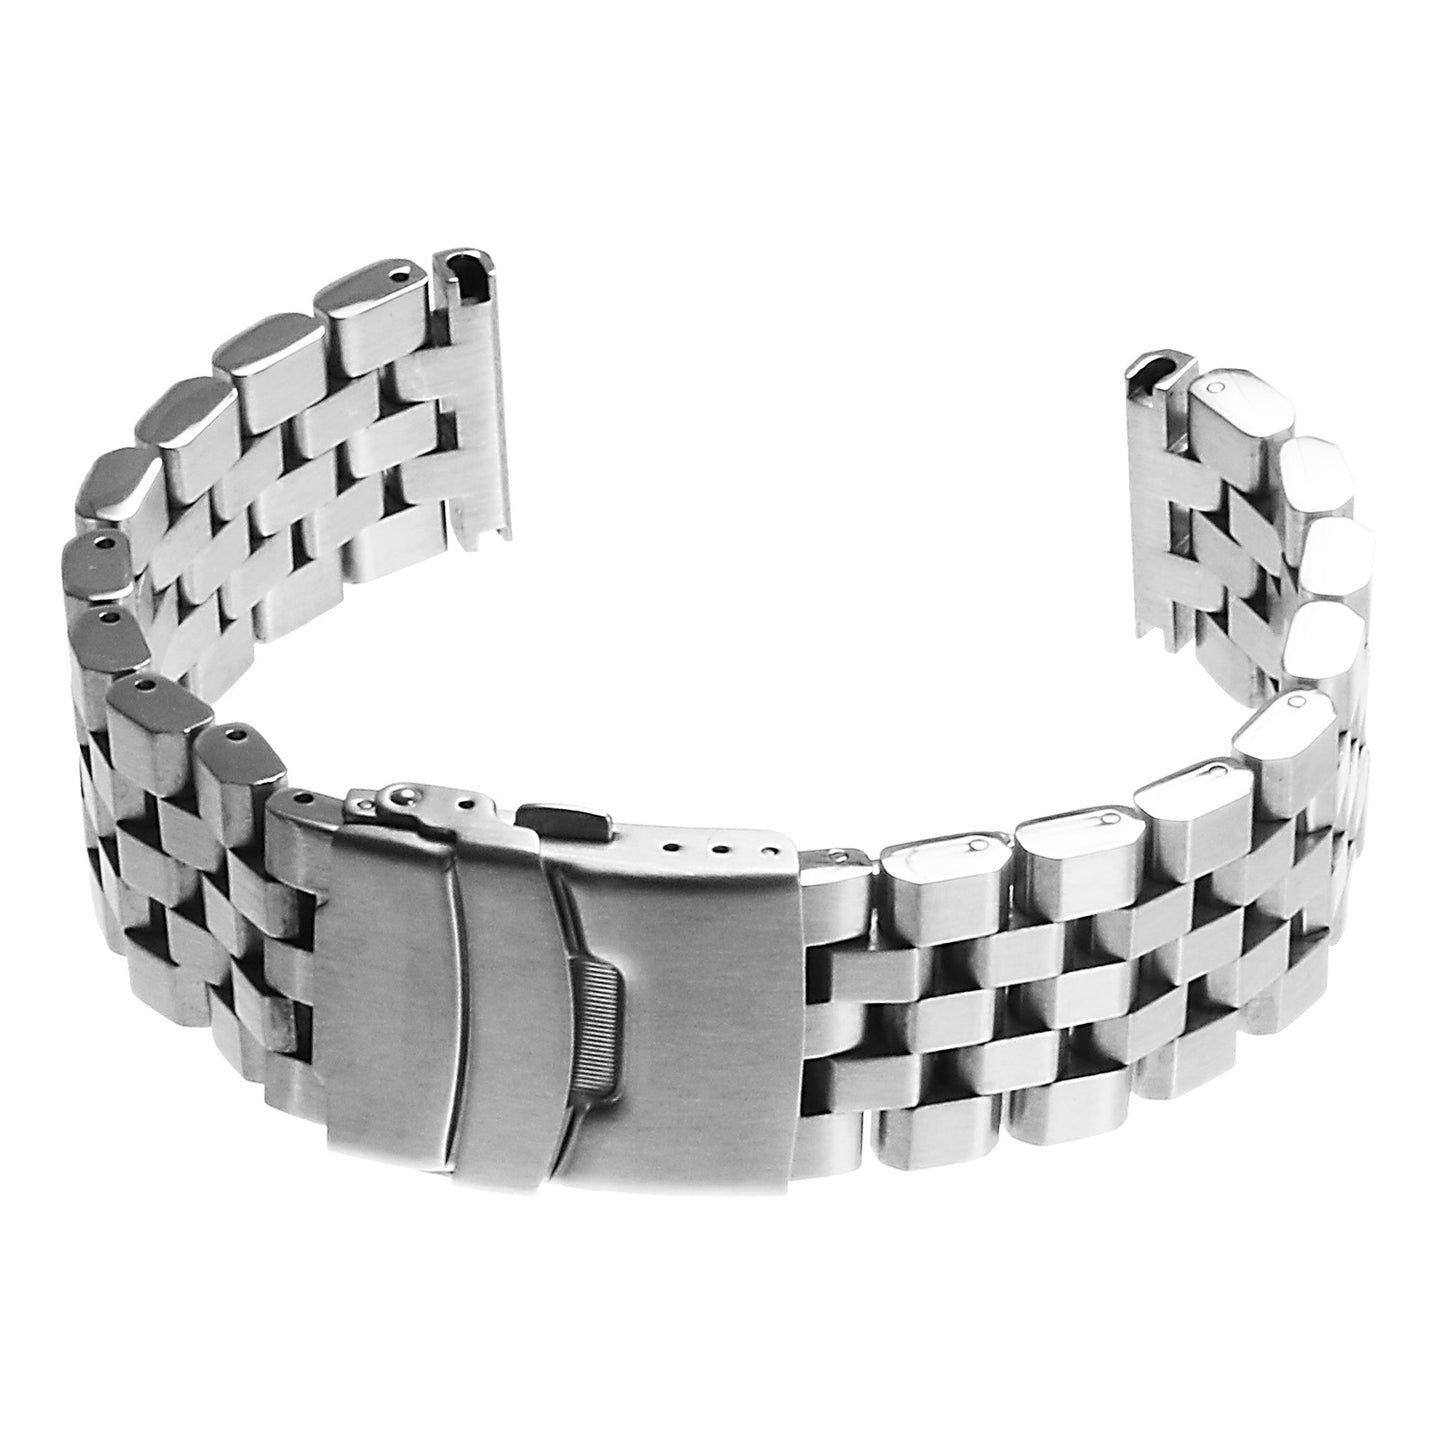 Super Engineer II Bracelet for Apple Watch